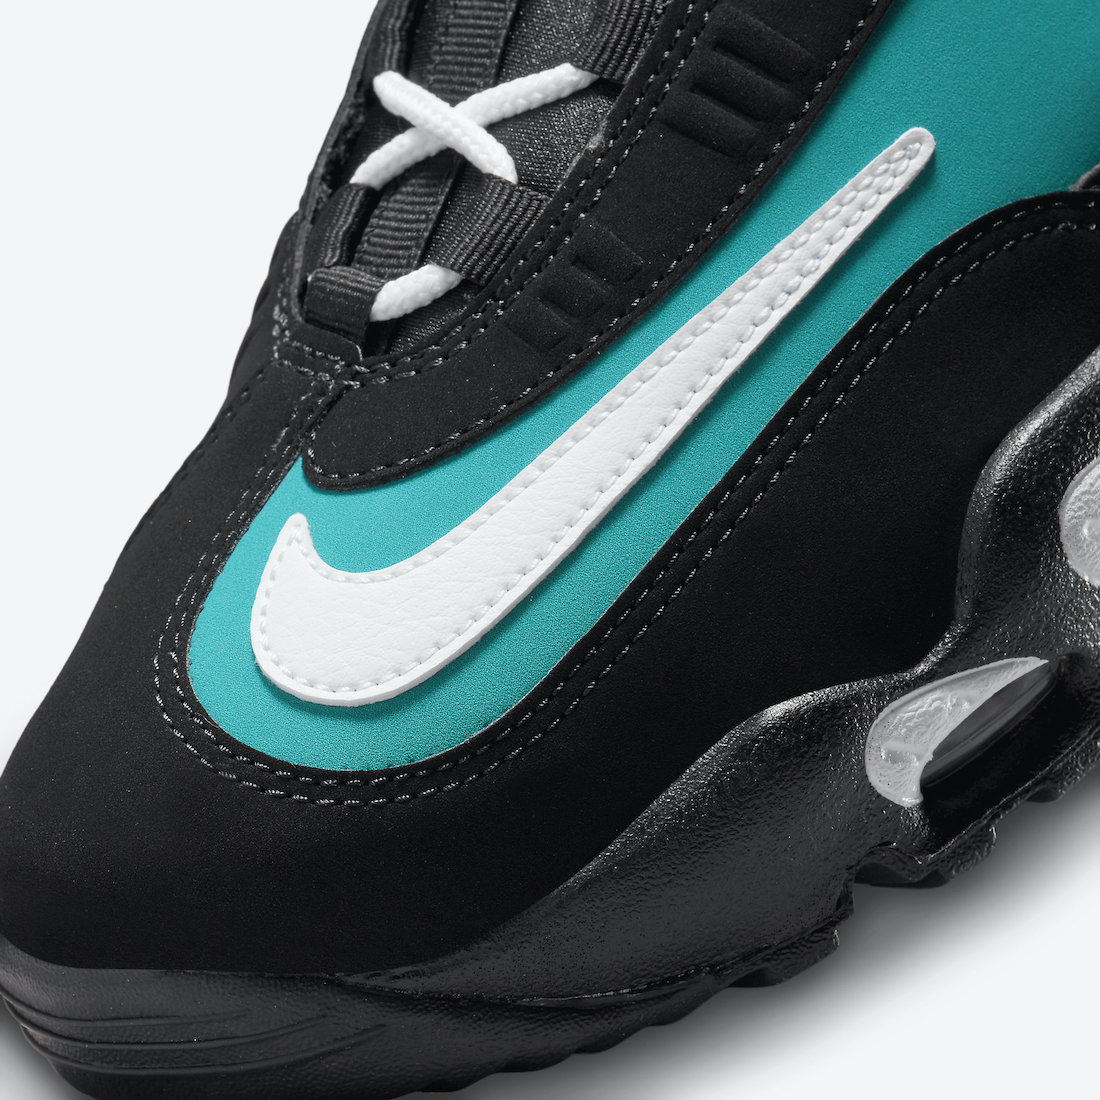 Sneaker Drop — Nike Air Griffey Max 1 'Freshwater